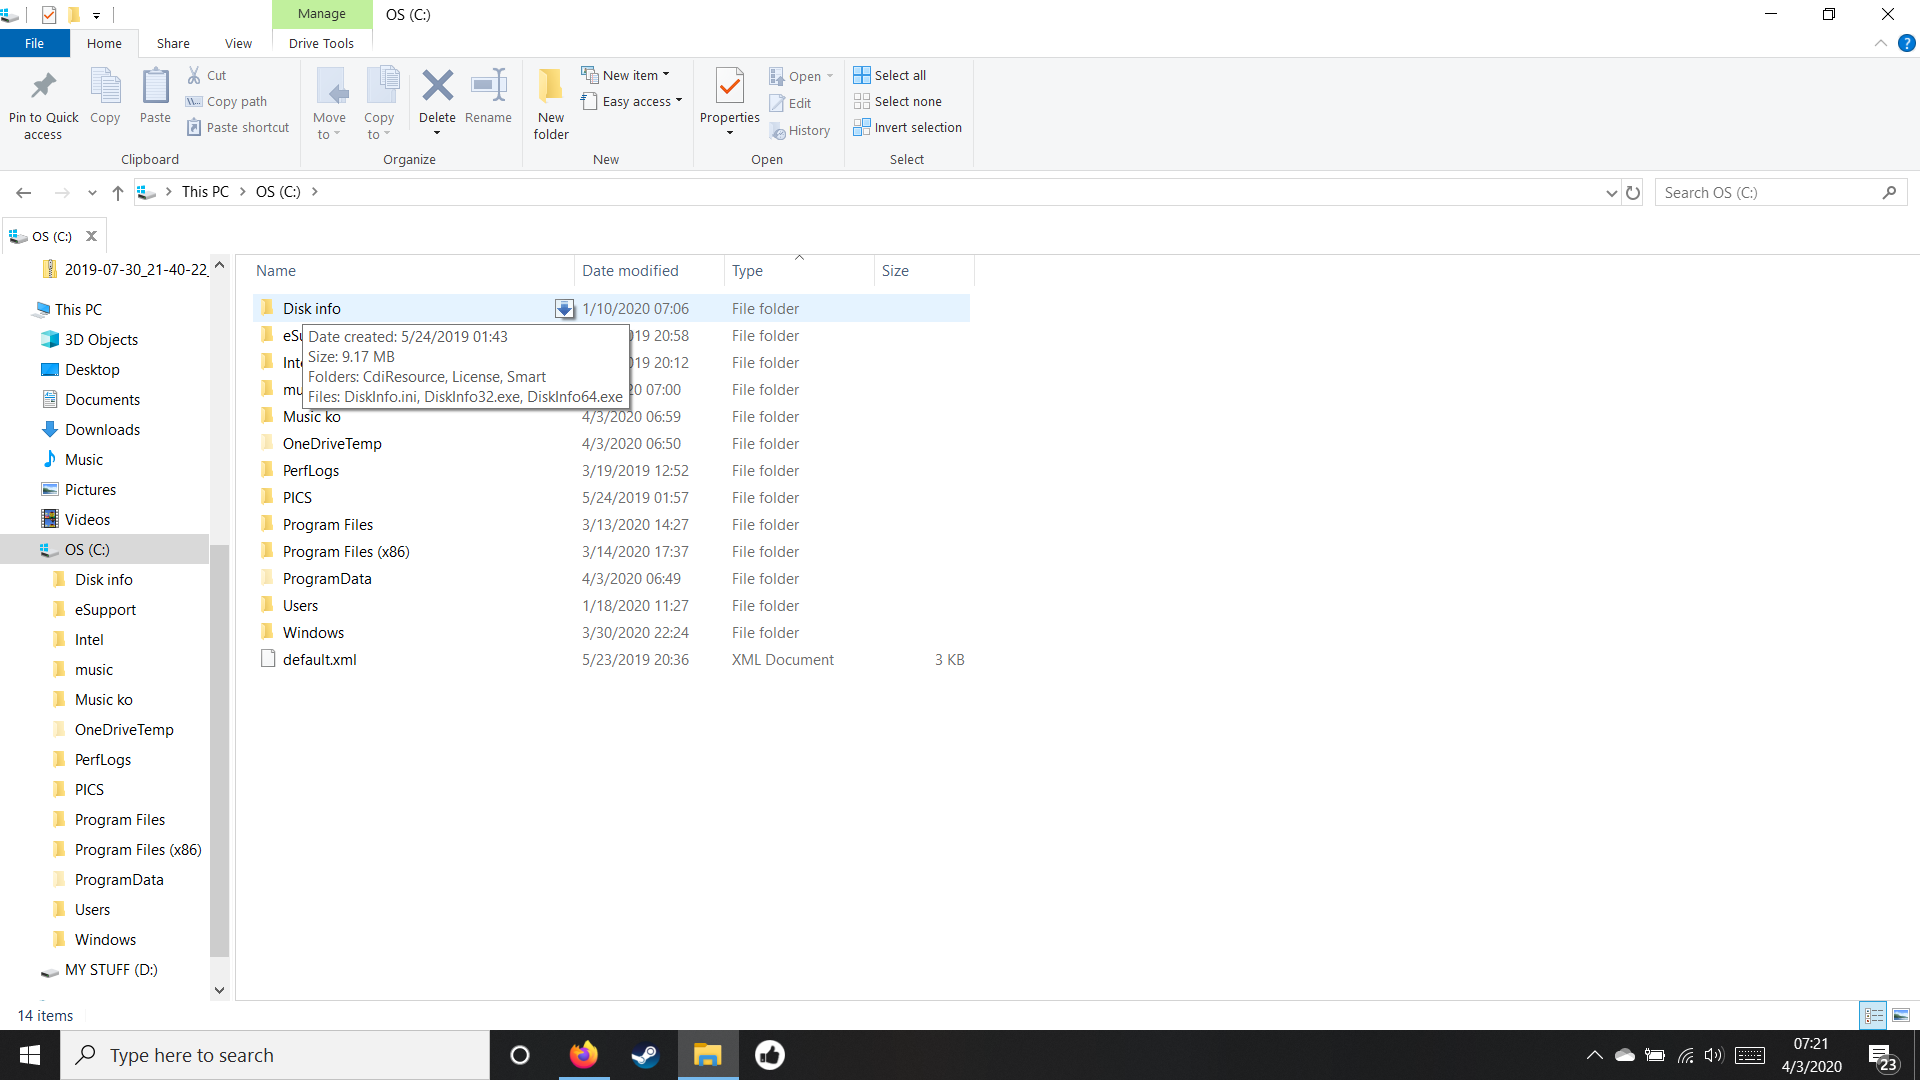 Windows folder in c and d drives d19d4819-feac-4b09-80f6-9c9eb9310306?upload=true.png